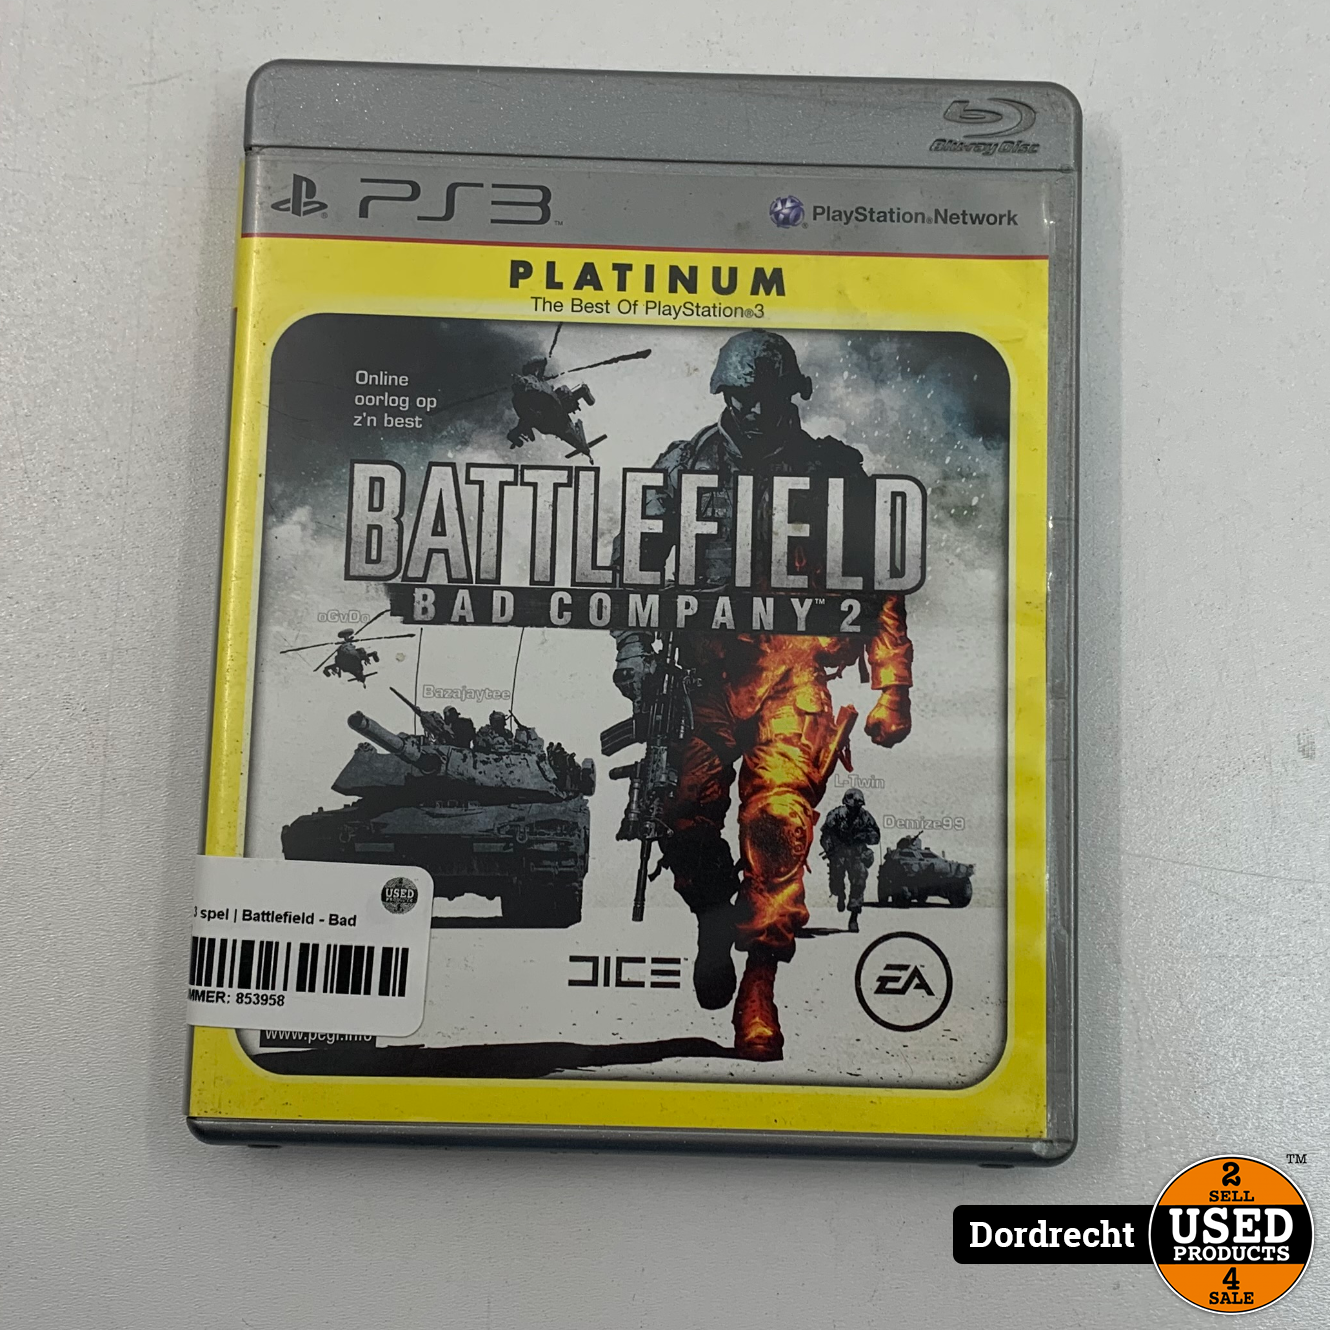 gek Zonsverduistering Verzwakken Playstation 3 spel | Battlefield - Bad Company 2 - Used Products Dordrecht